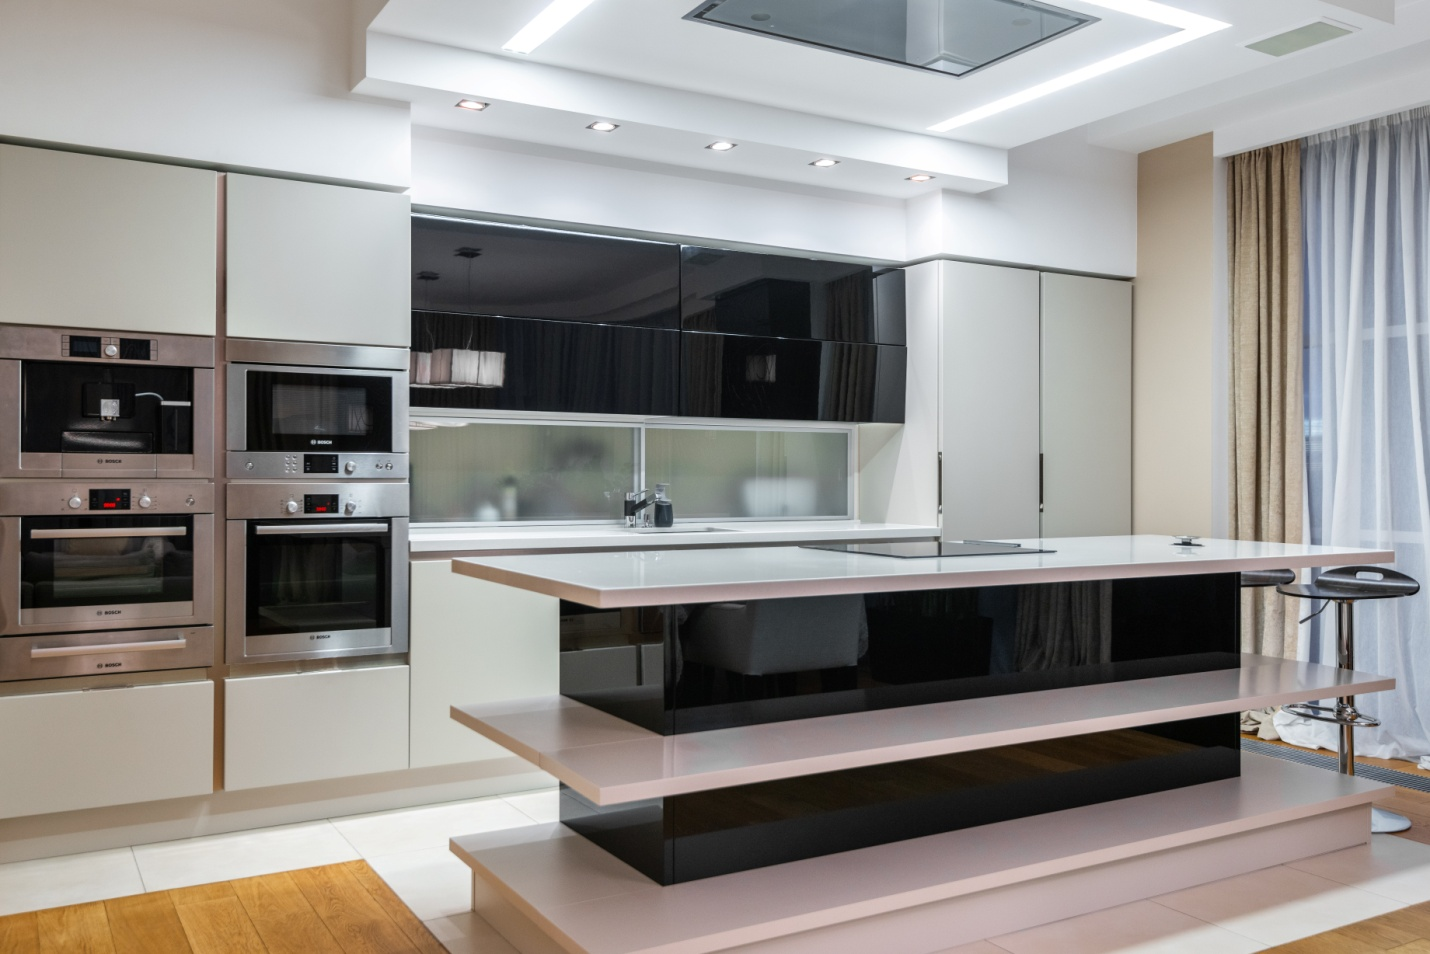  flat kitchen cabinet design with a stylish center island